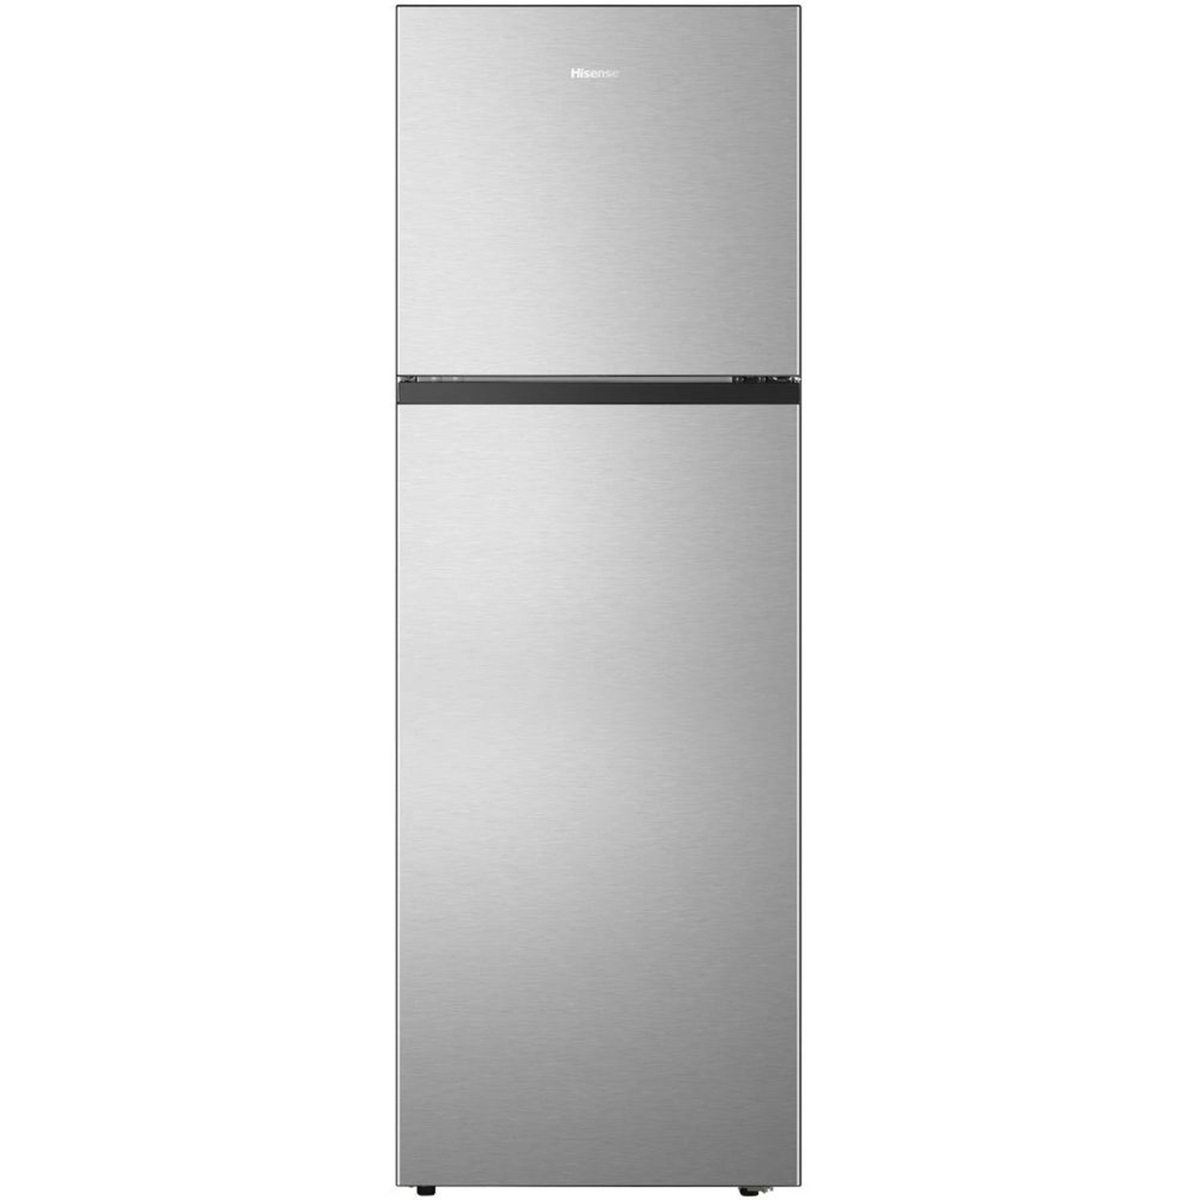 Hisense Double Door Refrigerator, 250L, Stainless Steel Finish, RT328N4DGN